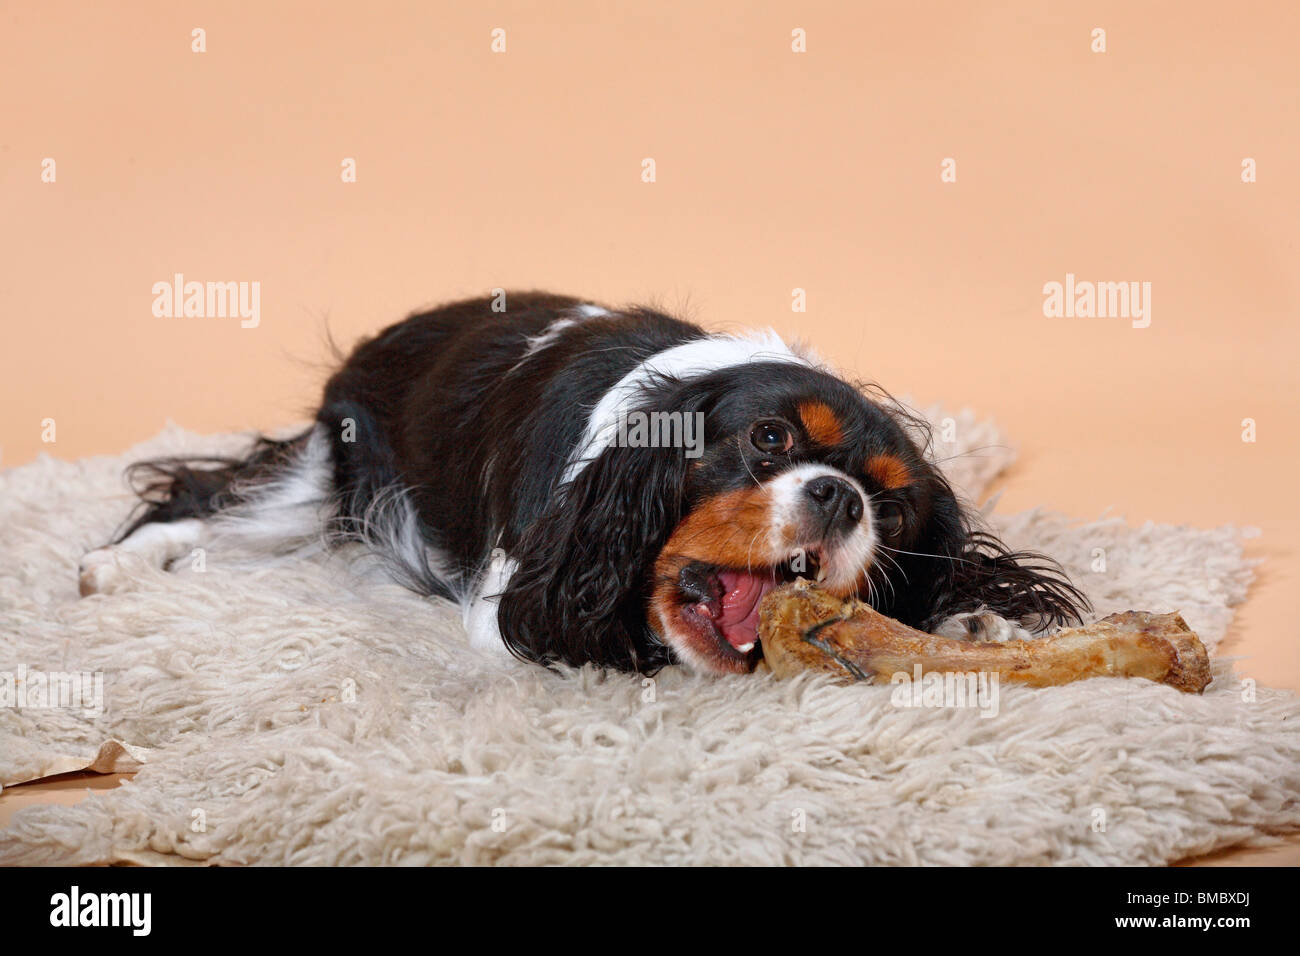 Hund knabbert Knochen / rosicchia cane Foto Stock